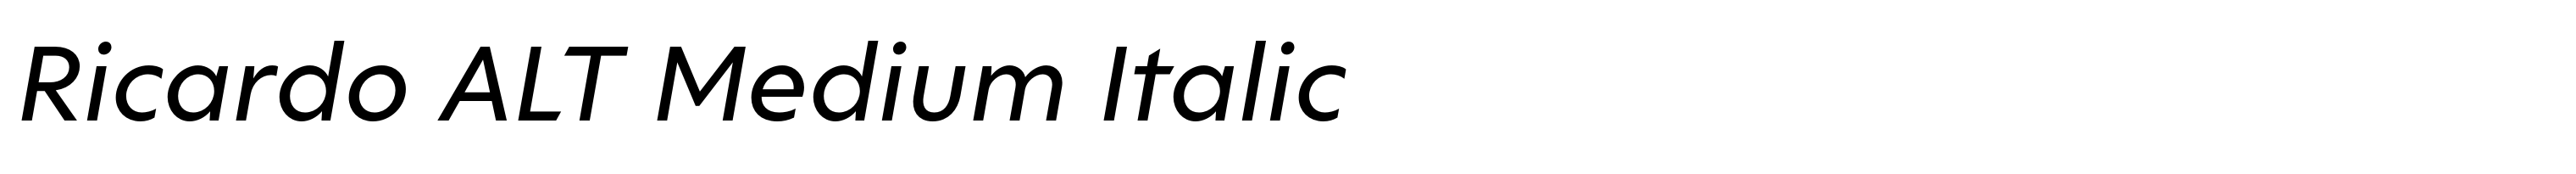 Ricardo ALT Medium Italic